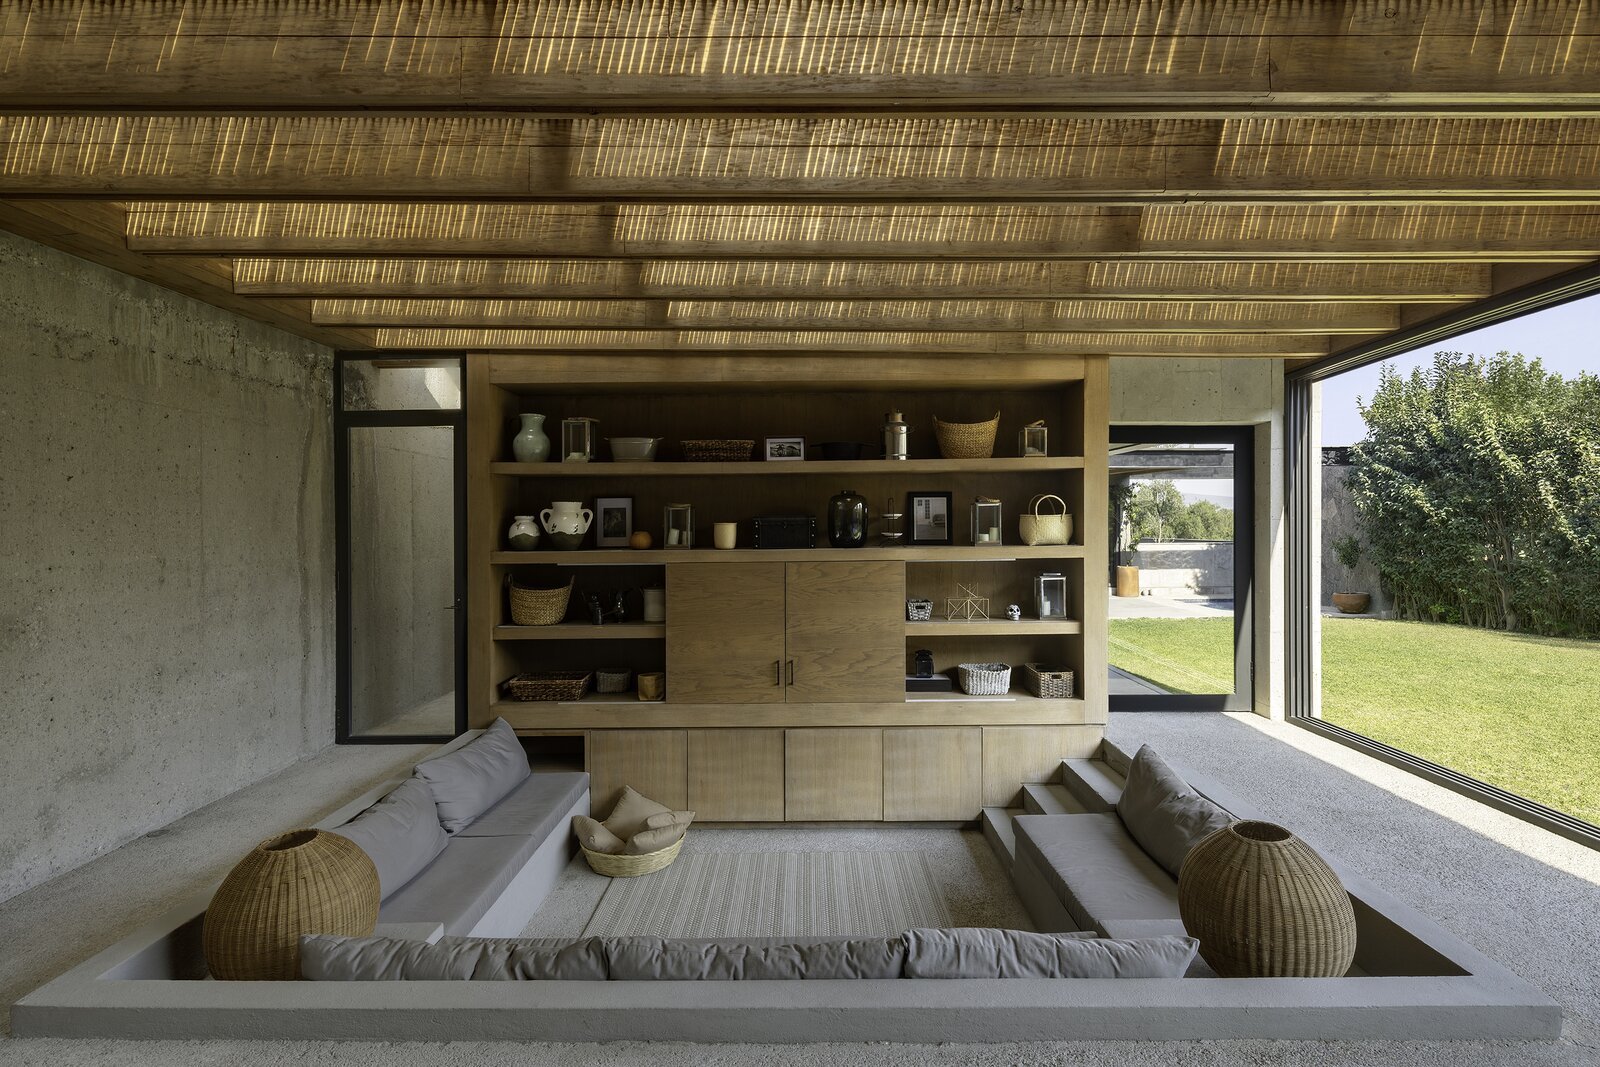 Casa en mexico con techos de madera salon con sofas de obra